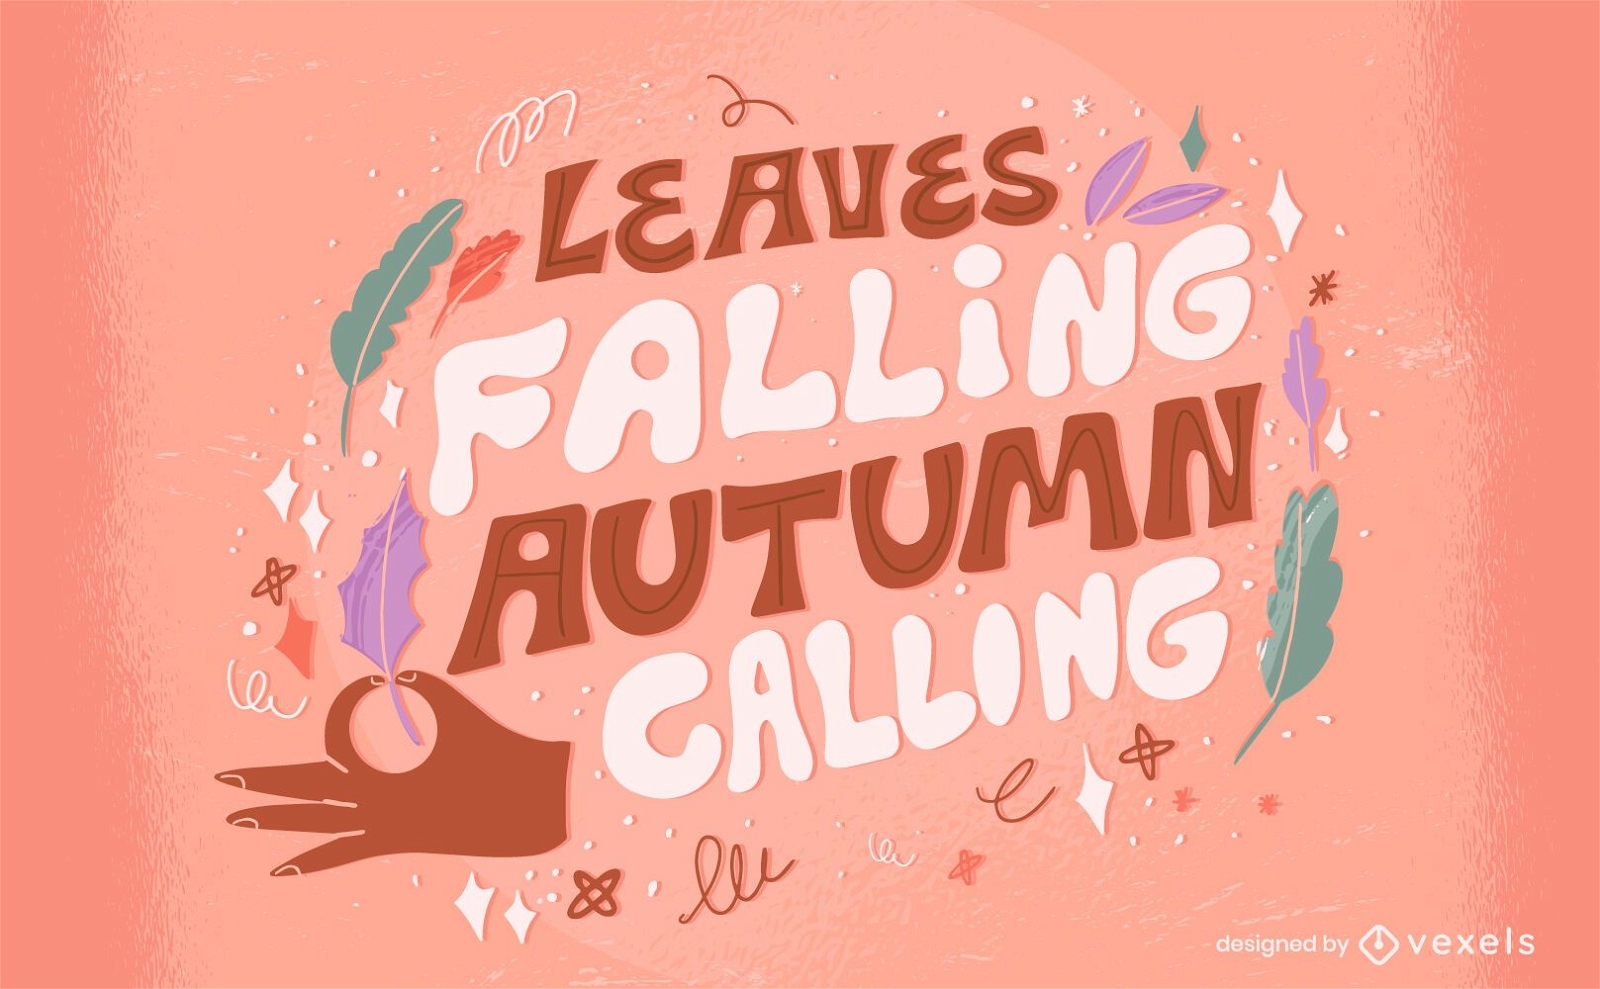 Autumn season leaves nature lettering